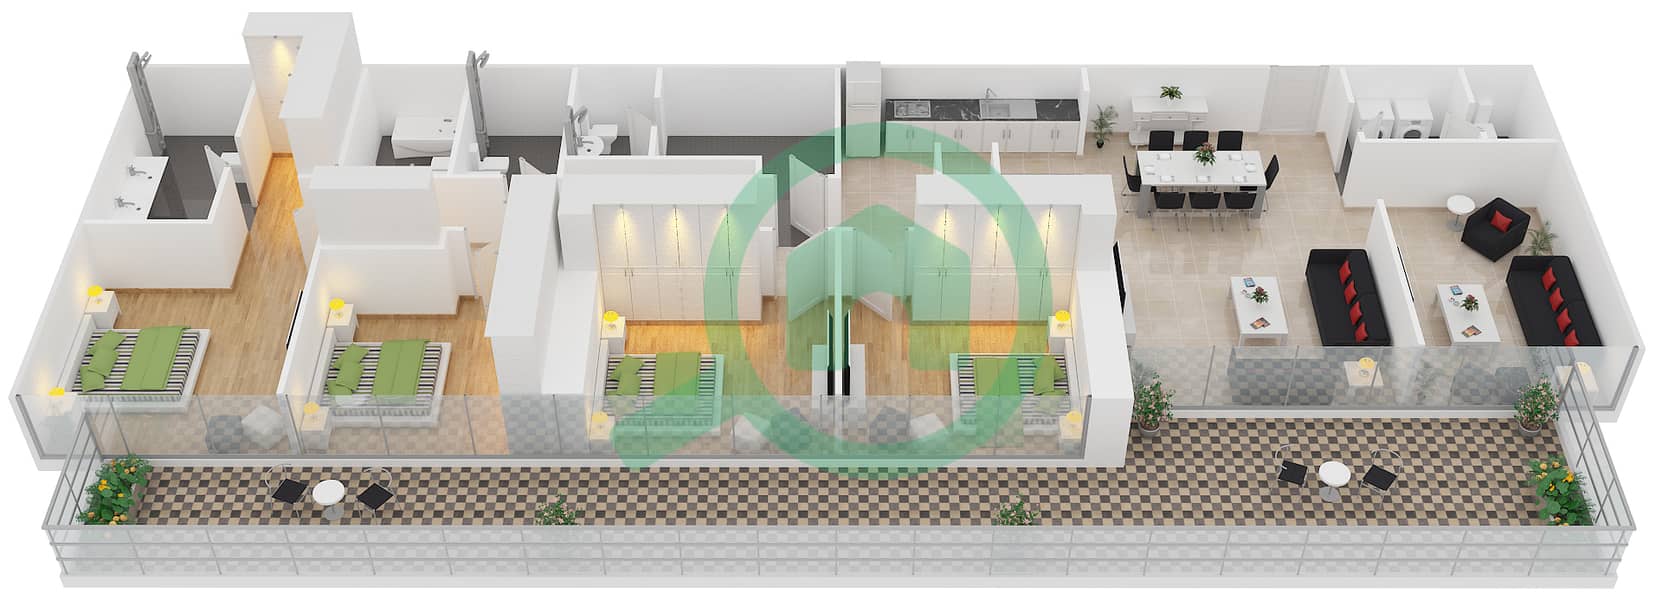 Zaya Hameni - 4 Bedroom Apartment Type E Floor plan interactive3D